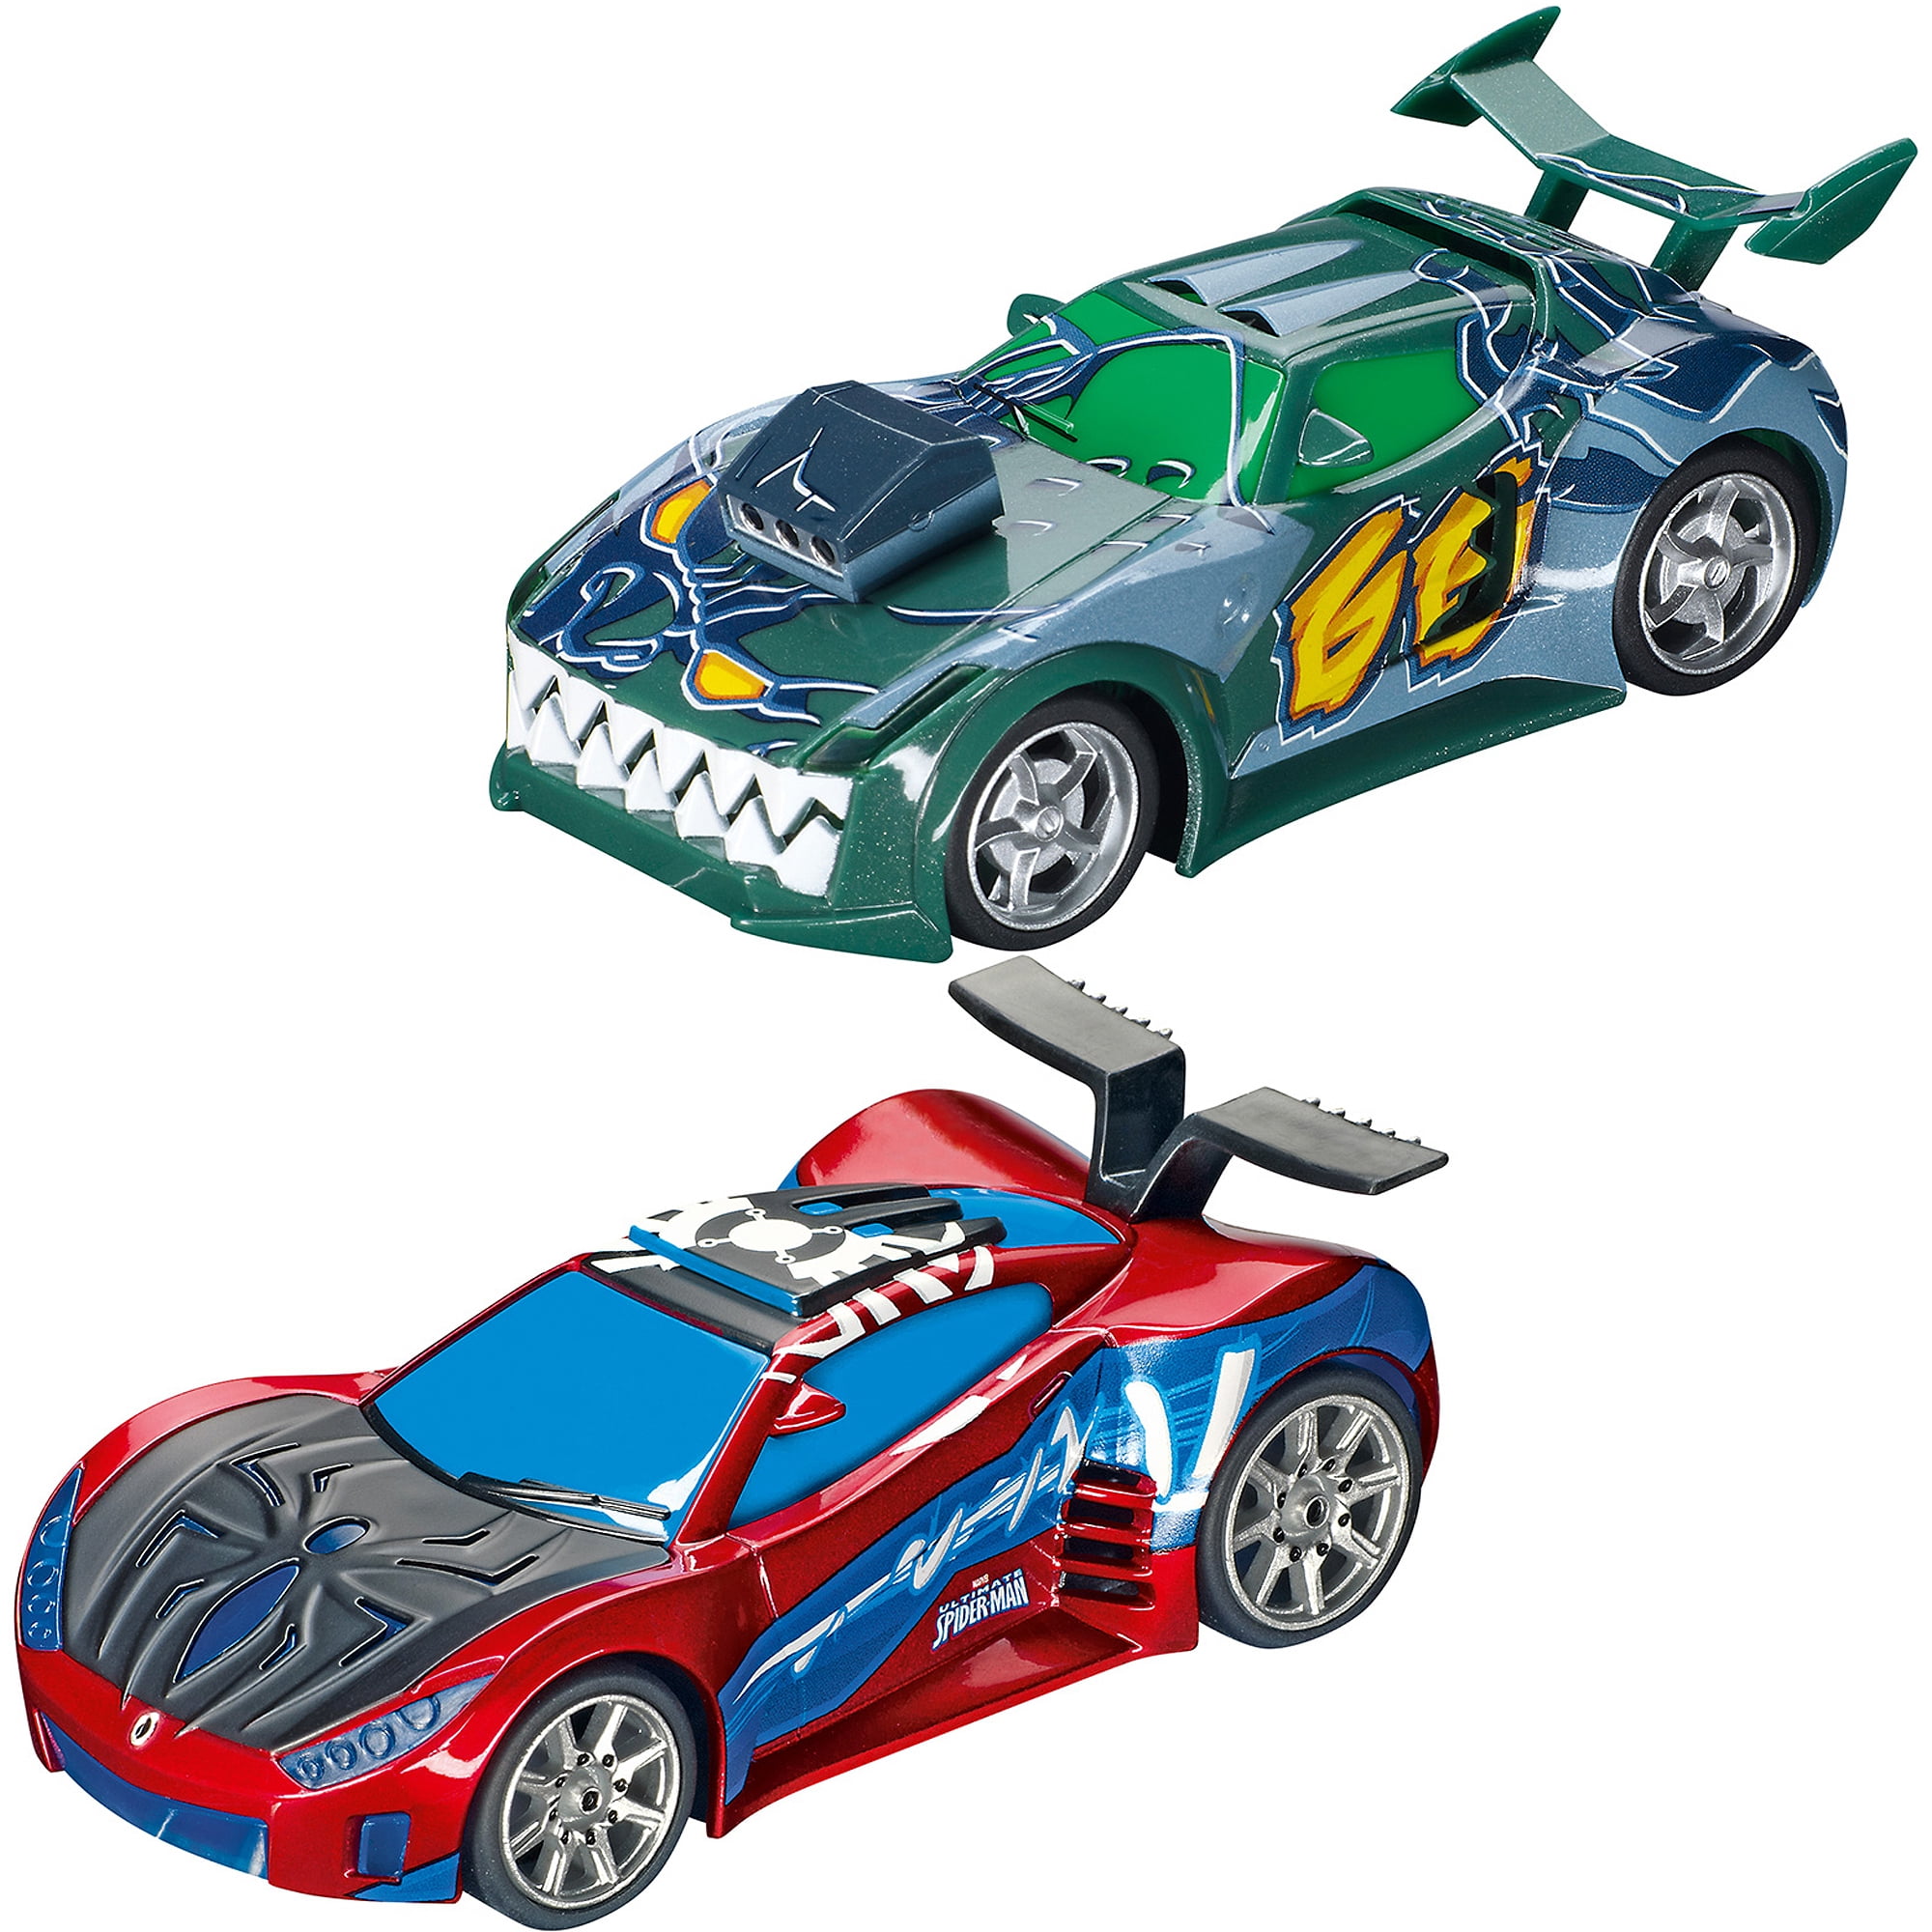 Carrera Toy Marvel Avengers Car Racing track SLOT CAR RACE TRACK SET NEW Processeur en Boîte 